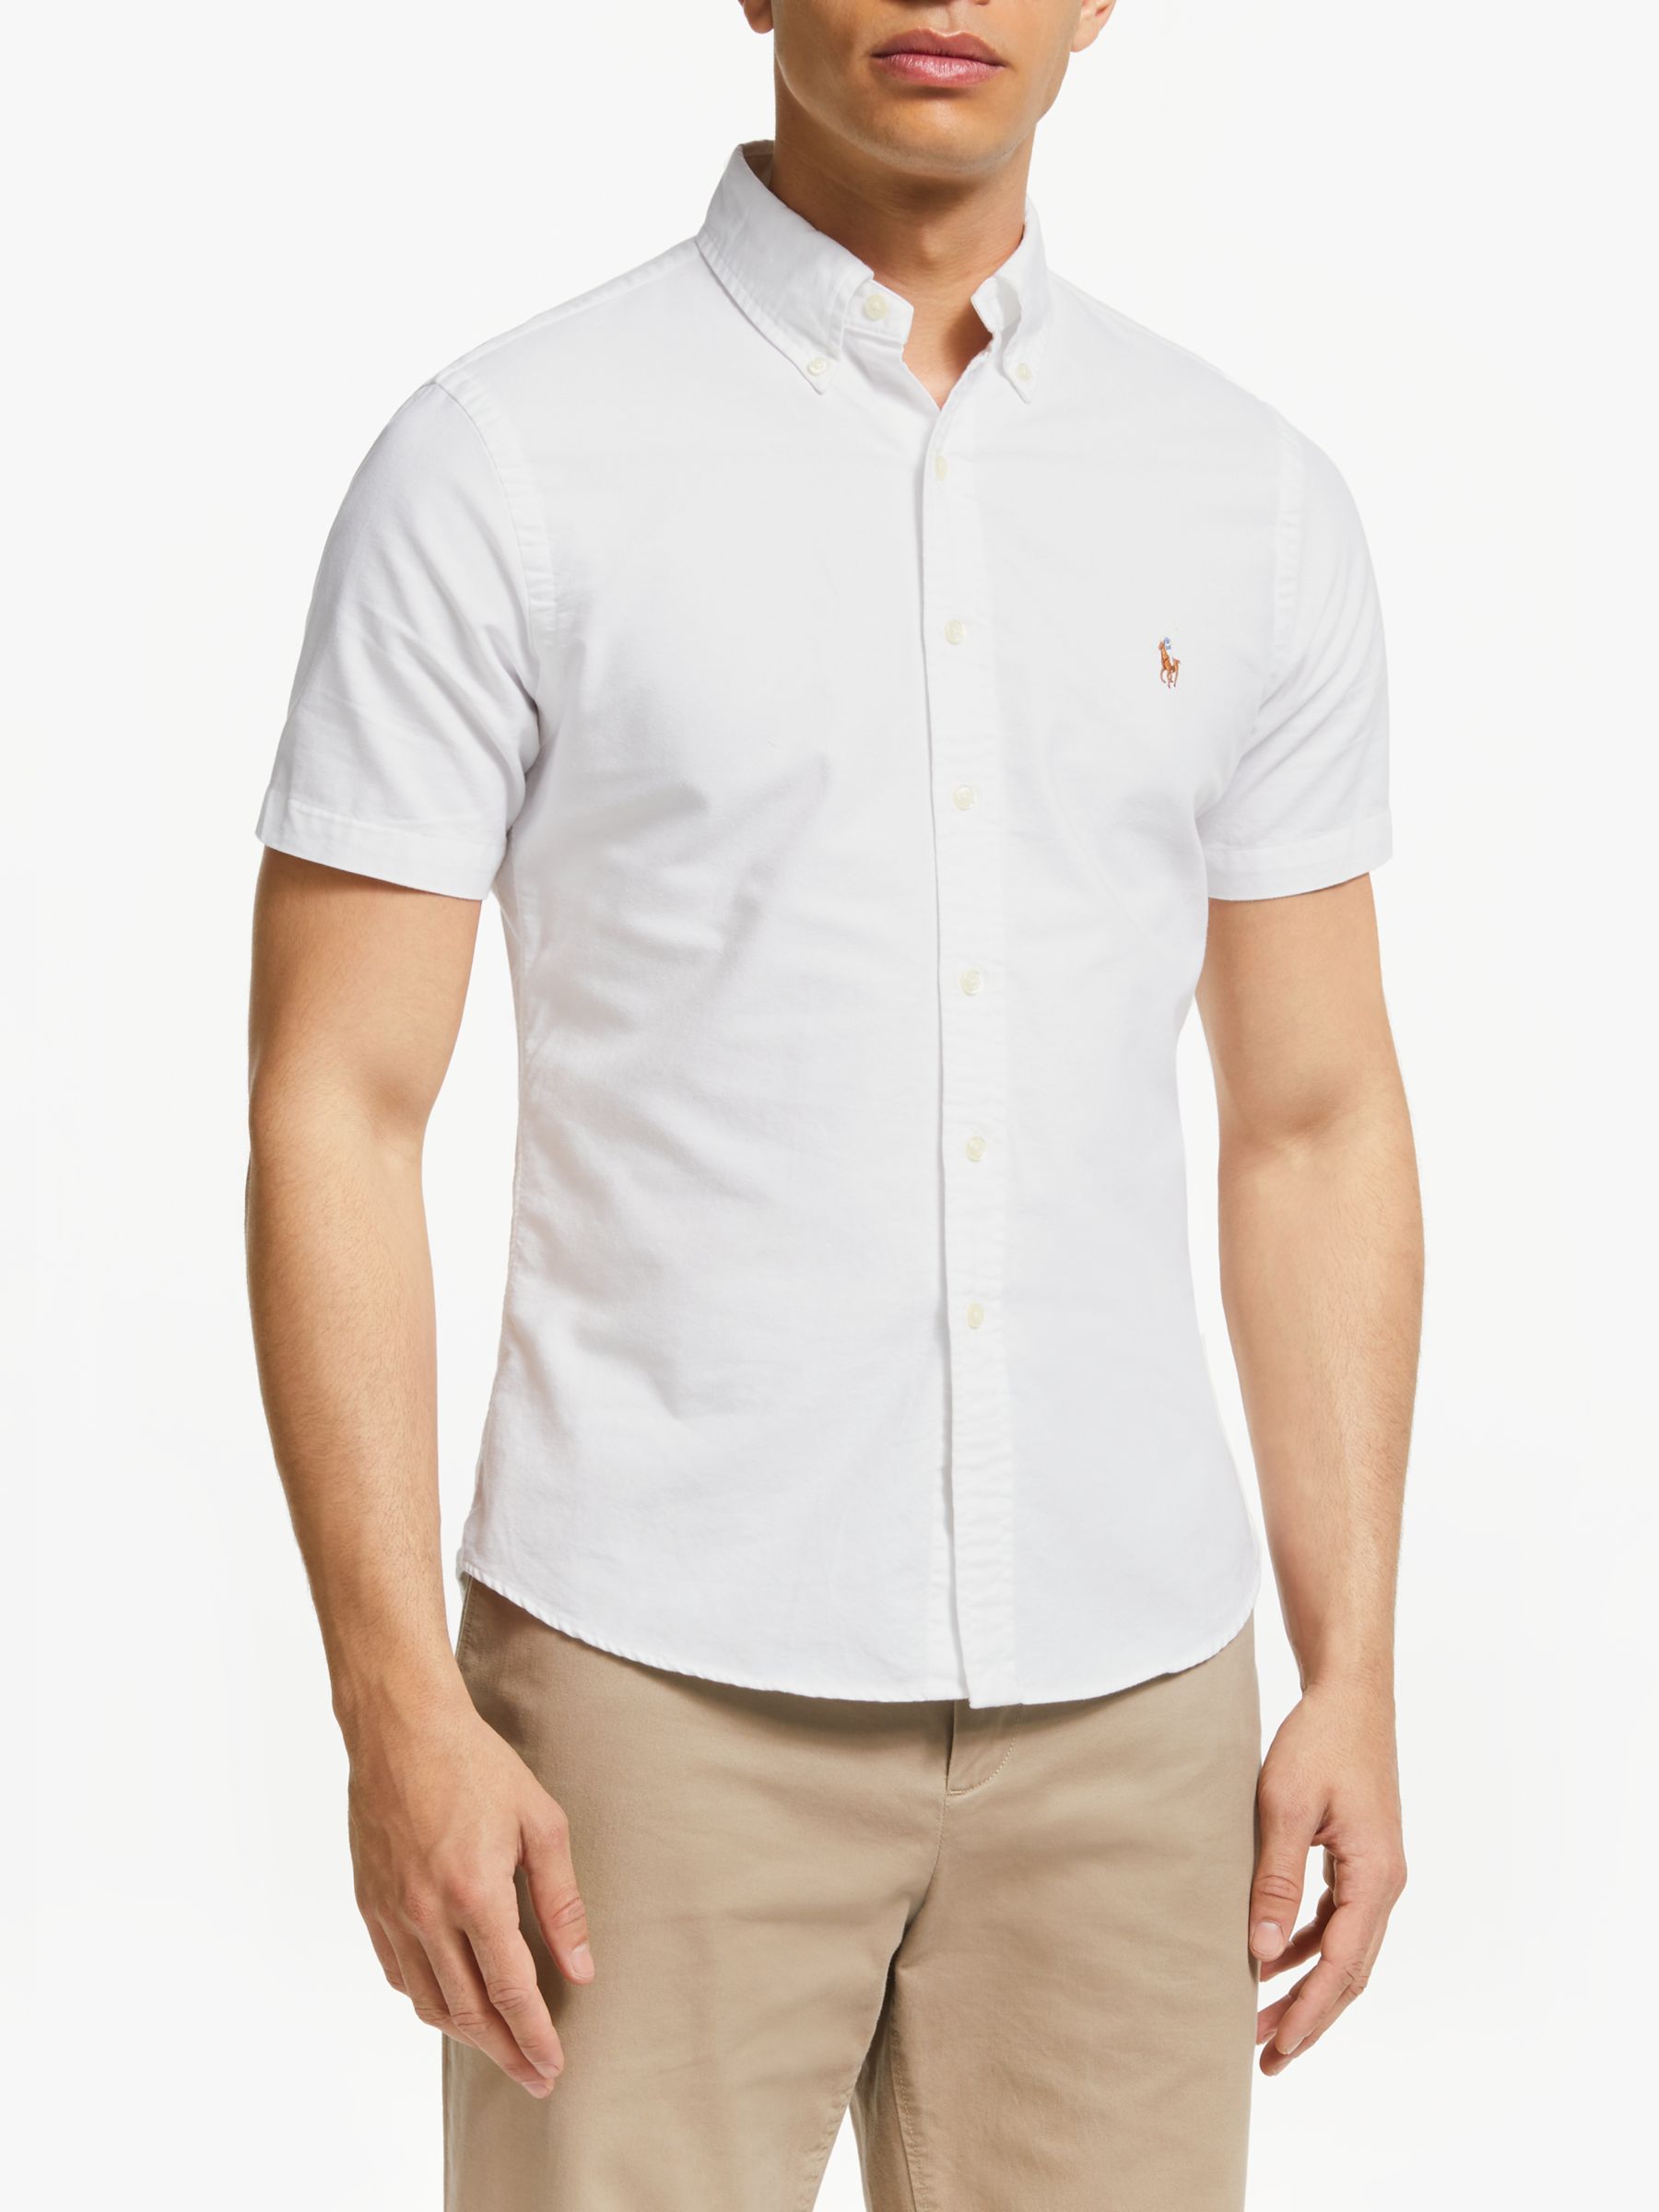 mens white ralph lauren short sleeve shirt